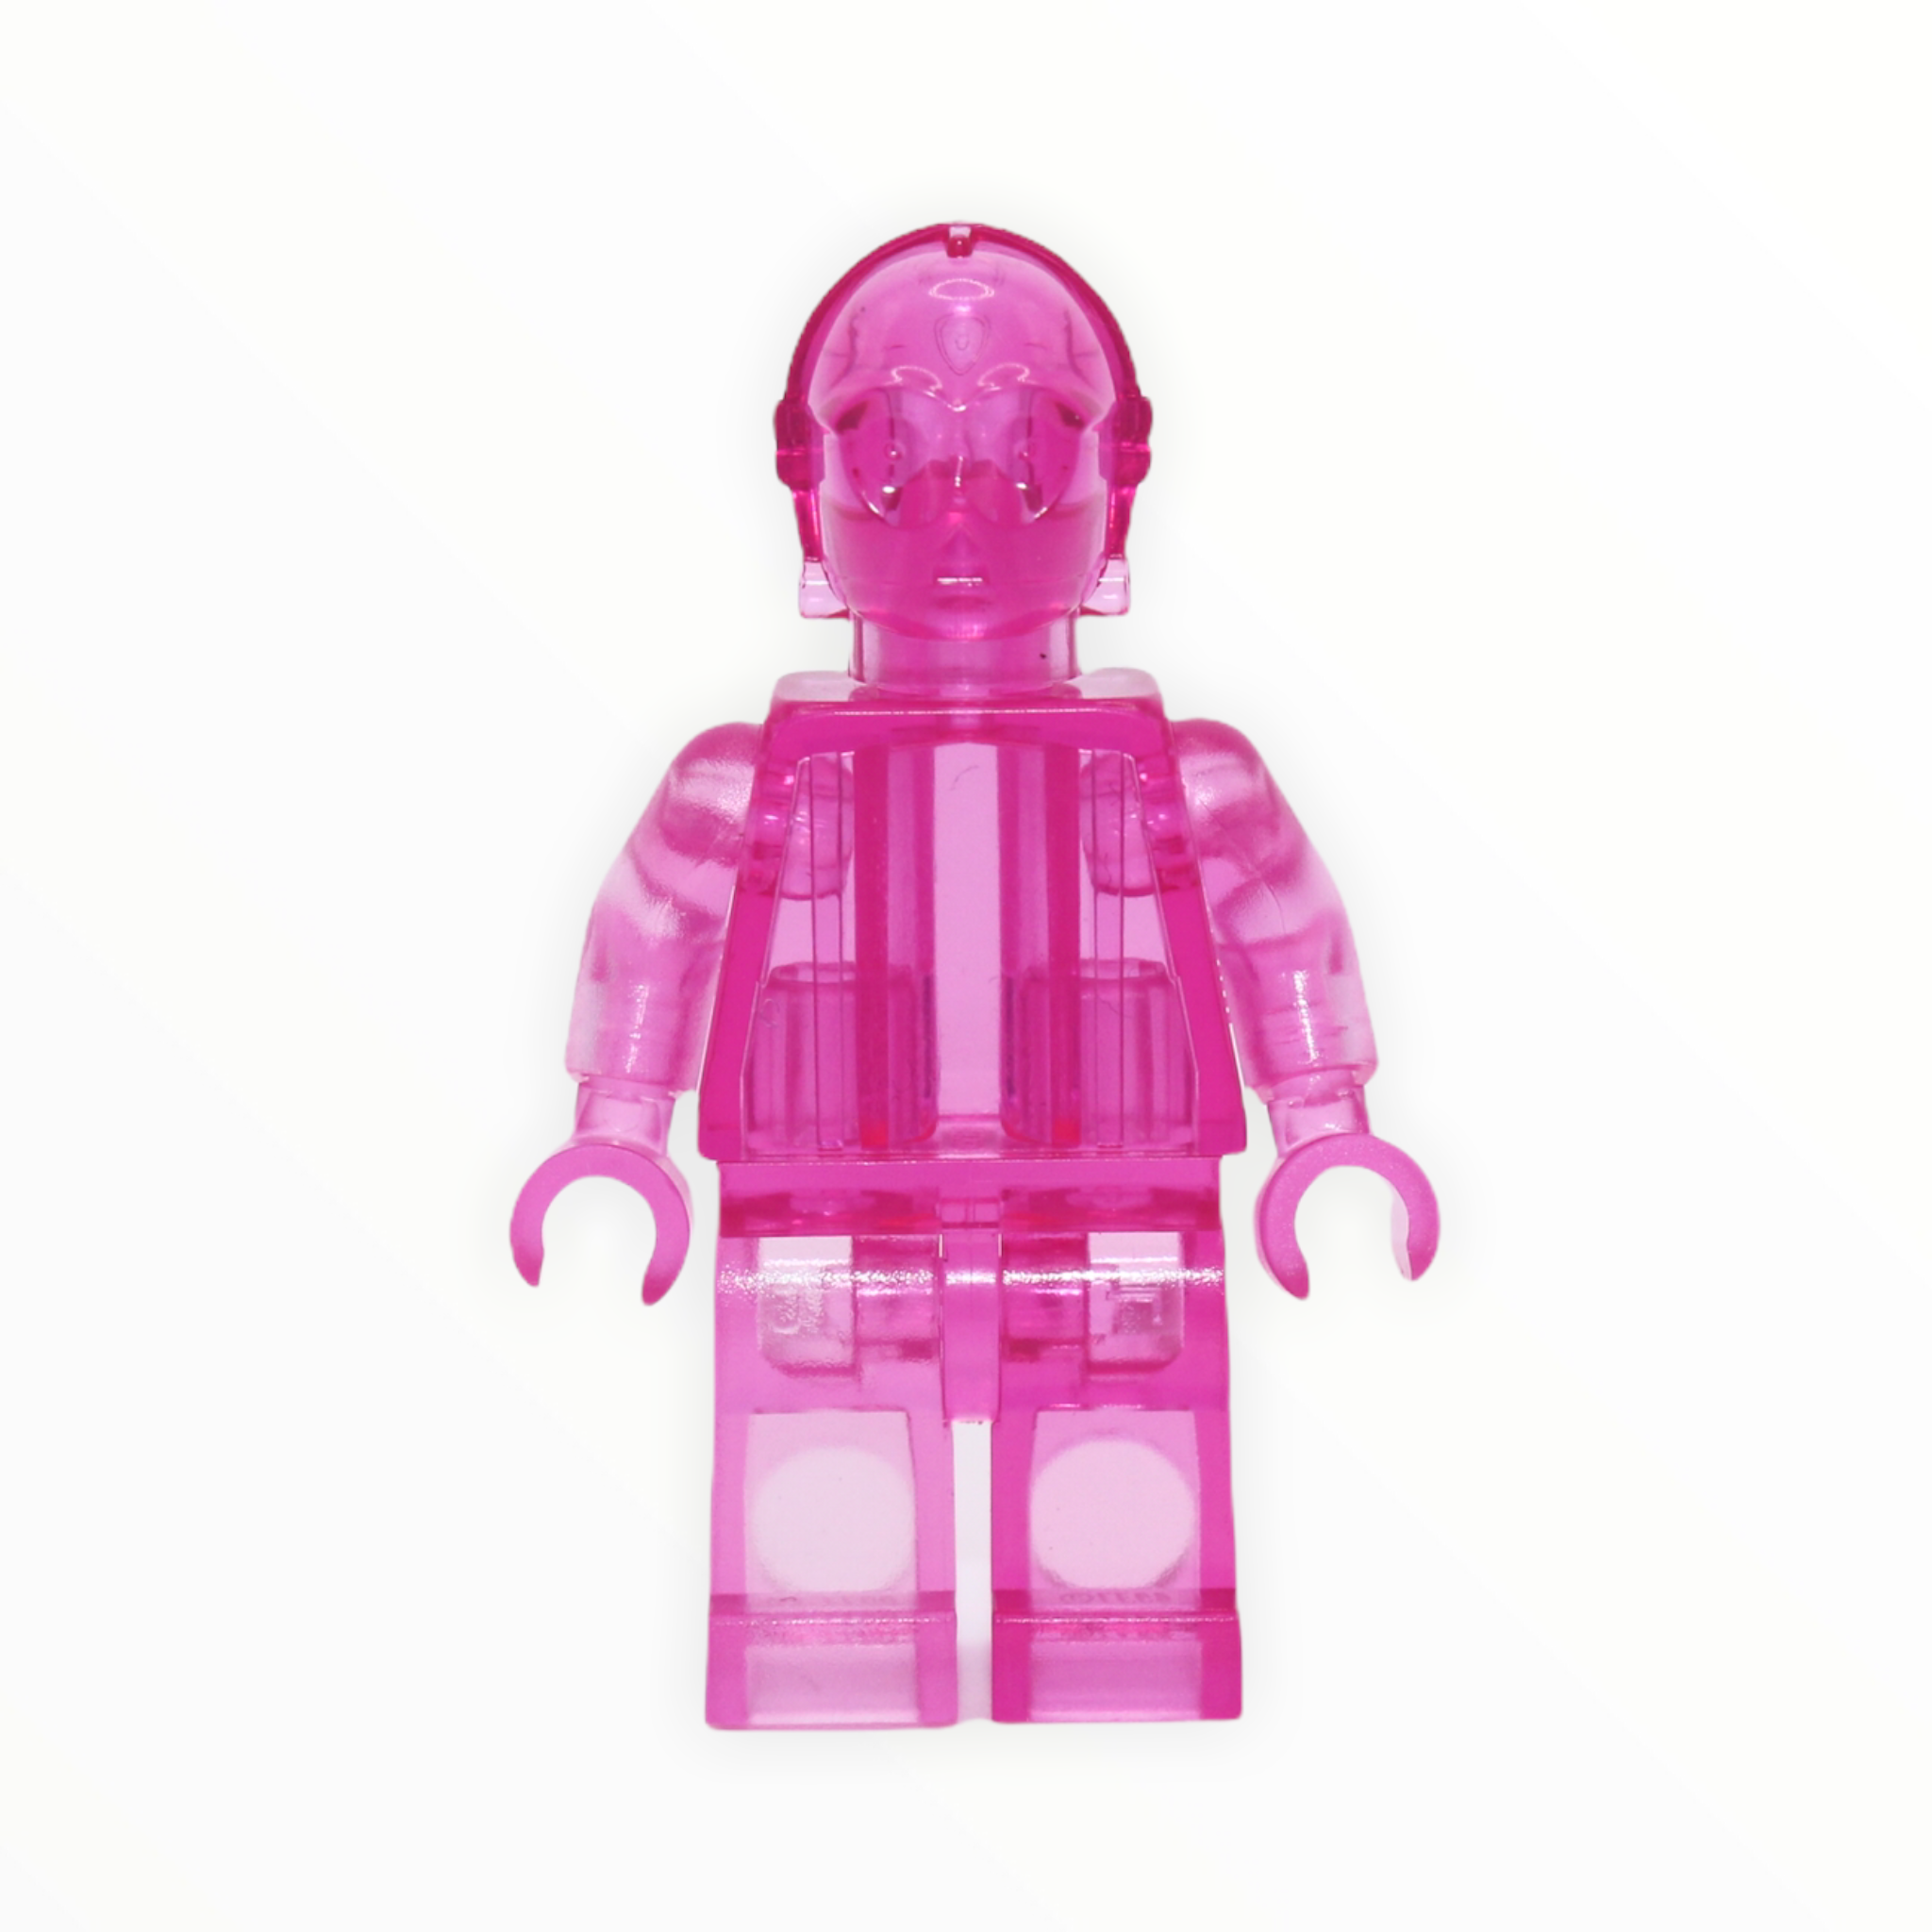 Lego Star Wars C3po Prototipo Rosa Transparente Muy Raro